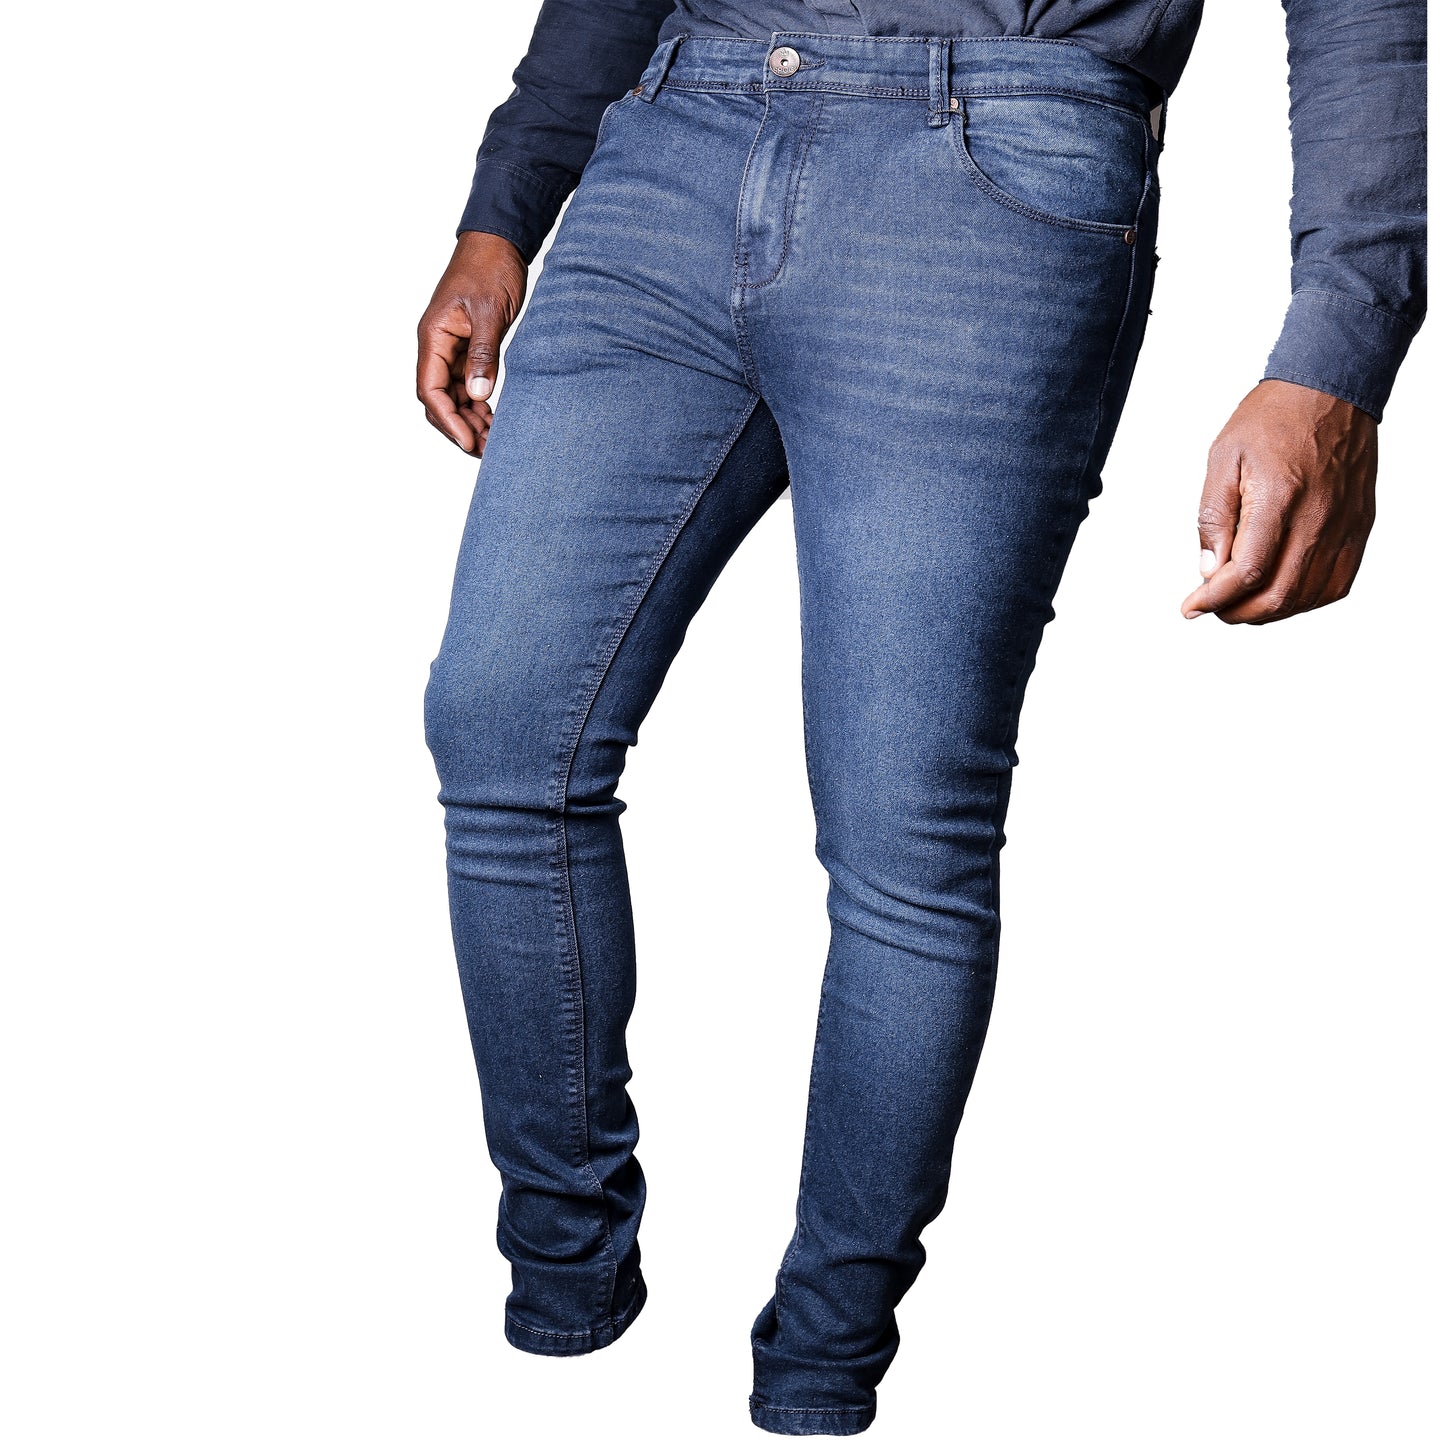 Spogi Basic Jeans